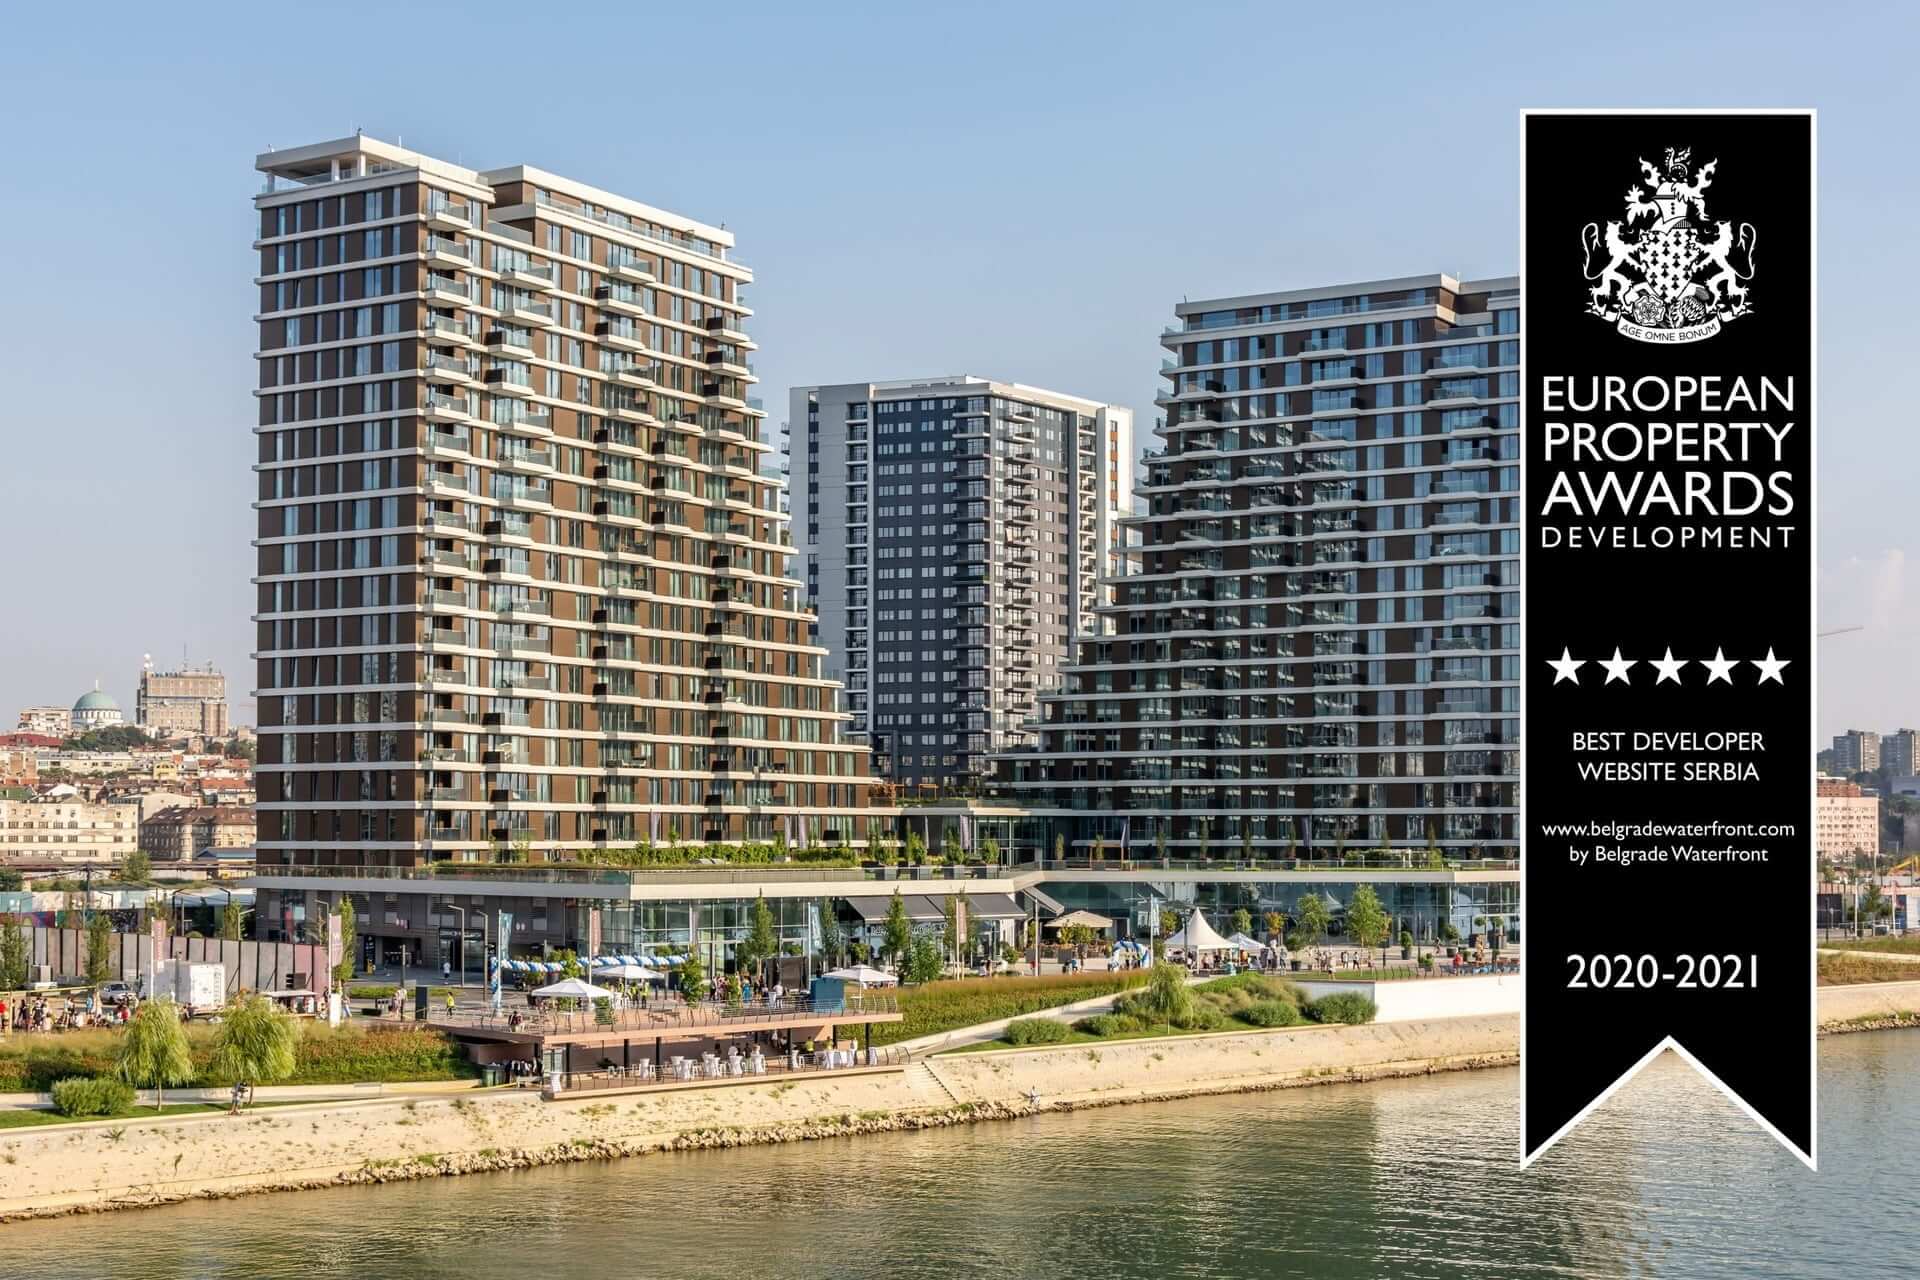 Belgrade Waterfront website has won a prestigious European Property Award